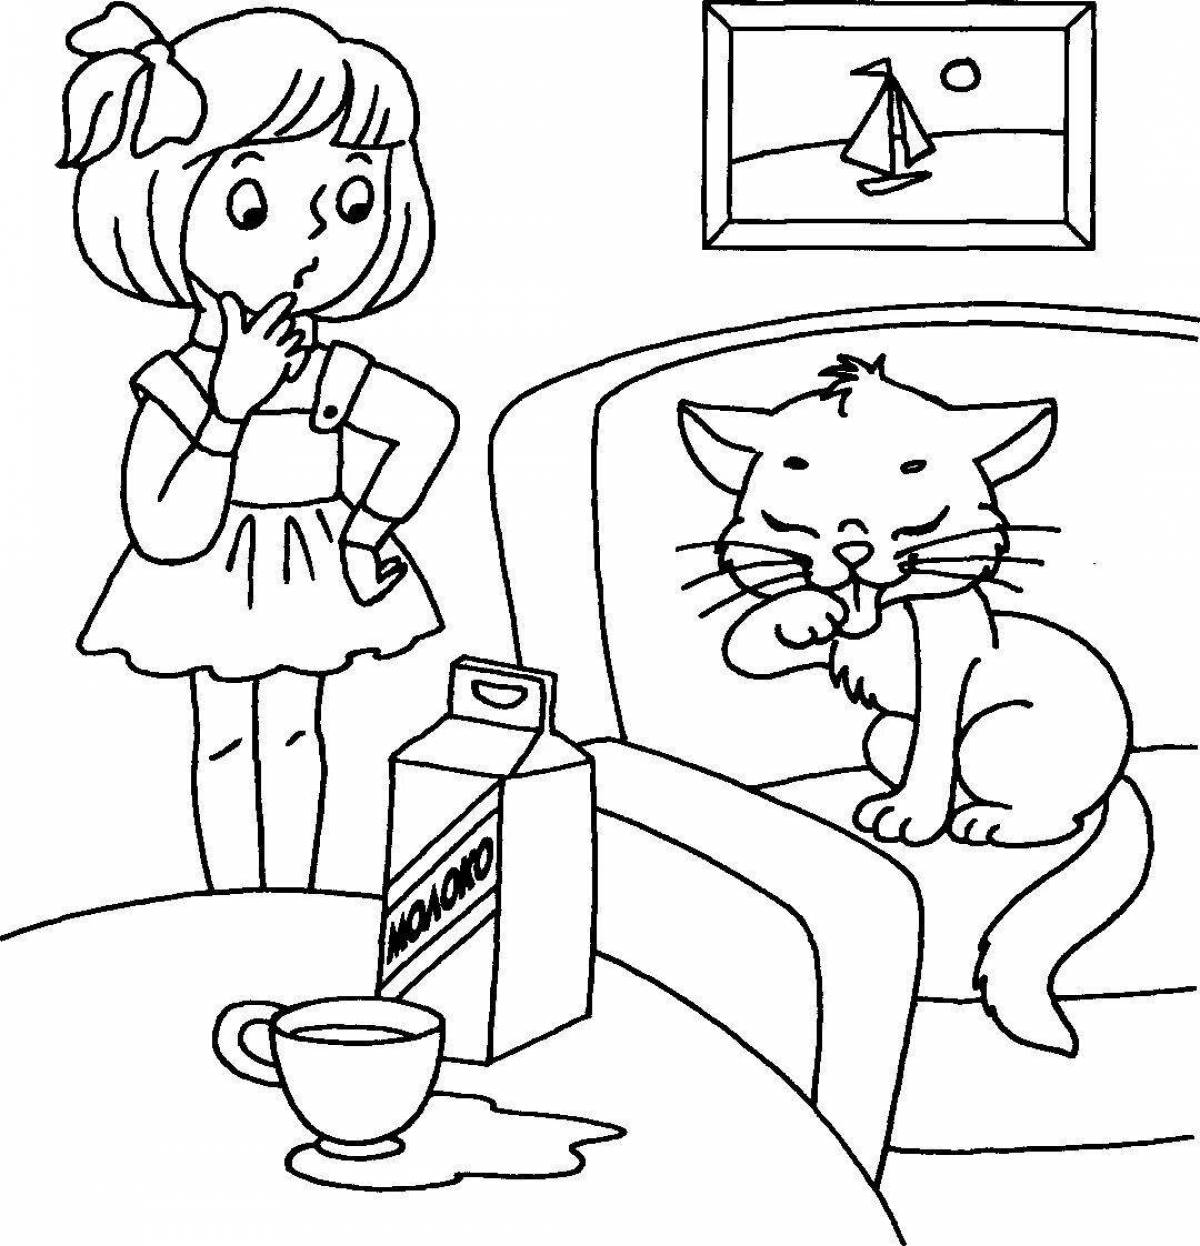 Luminous coloring book girl with a cat